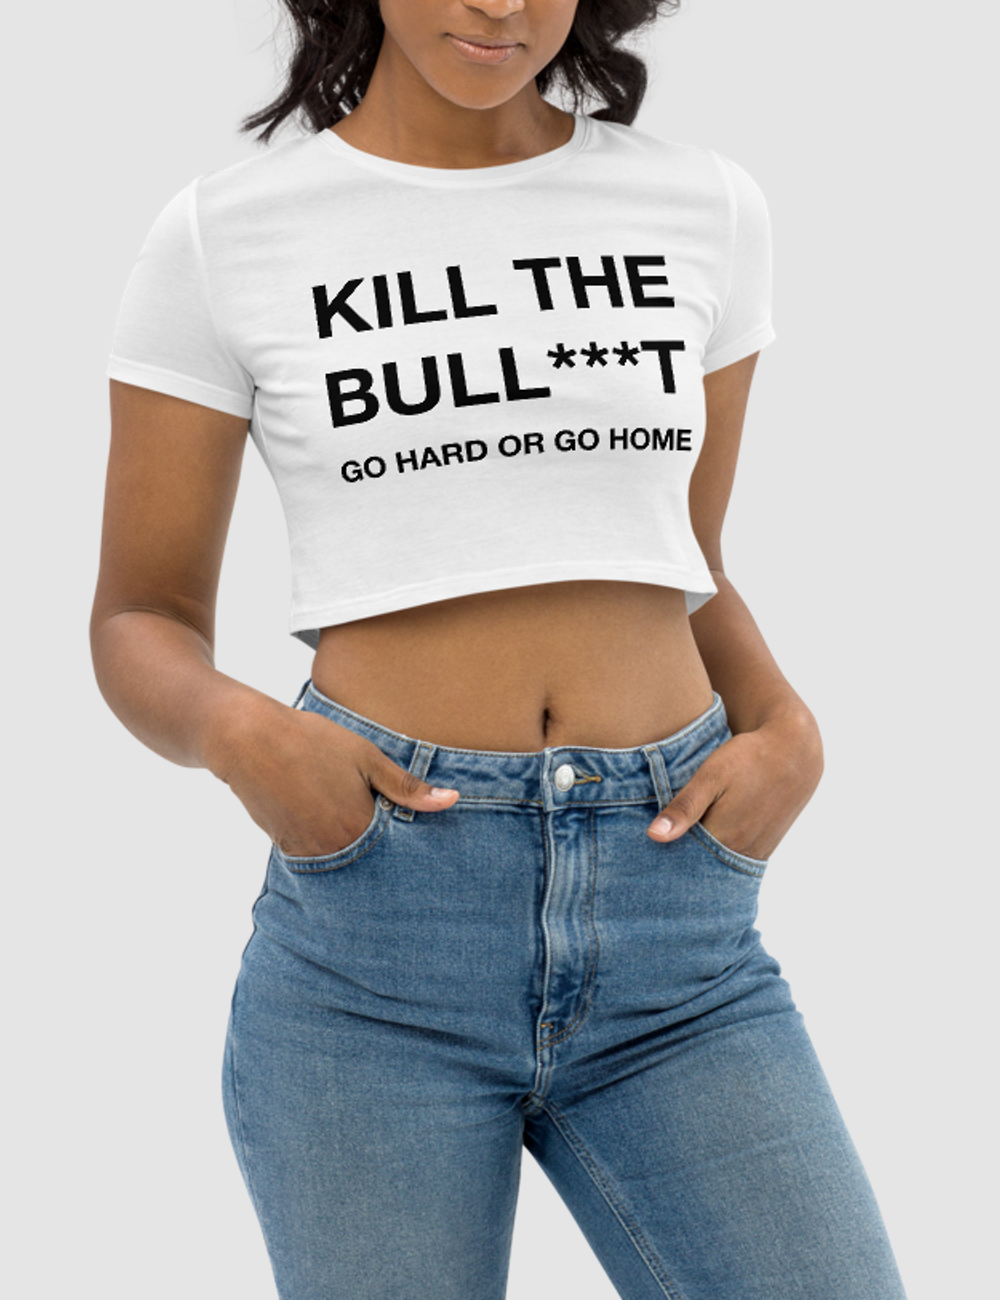 Kill The Bull***t | Women's Crop Top T-Shirt OniTakai